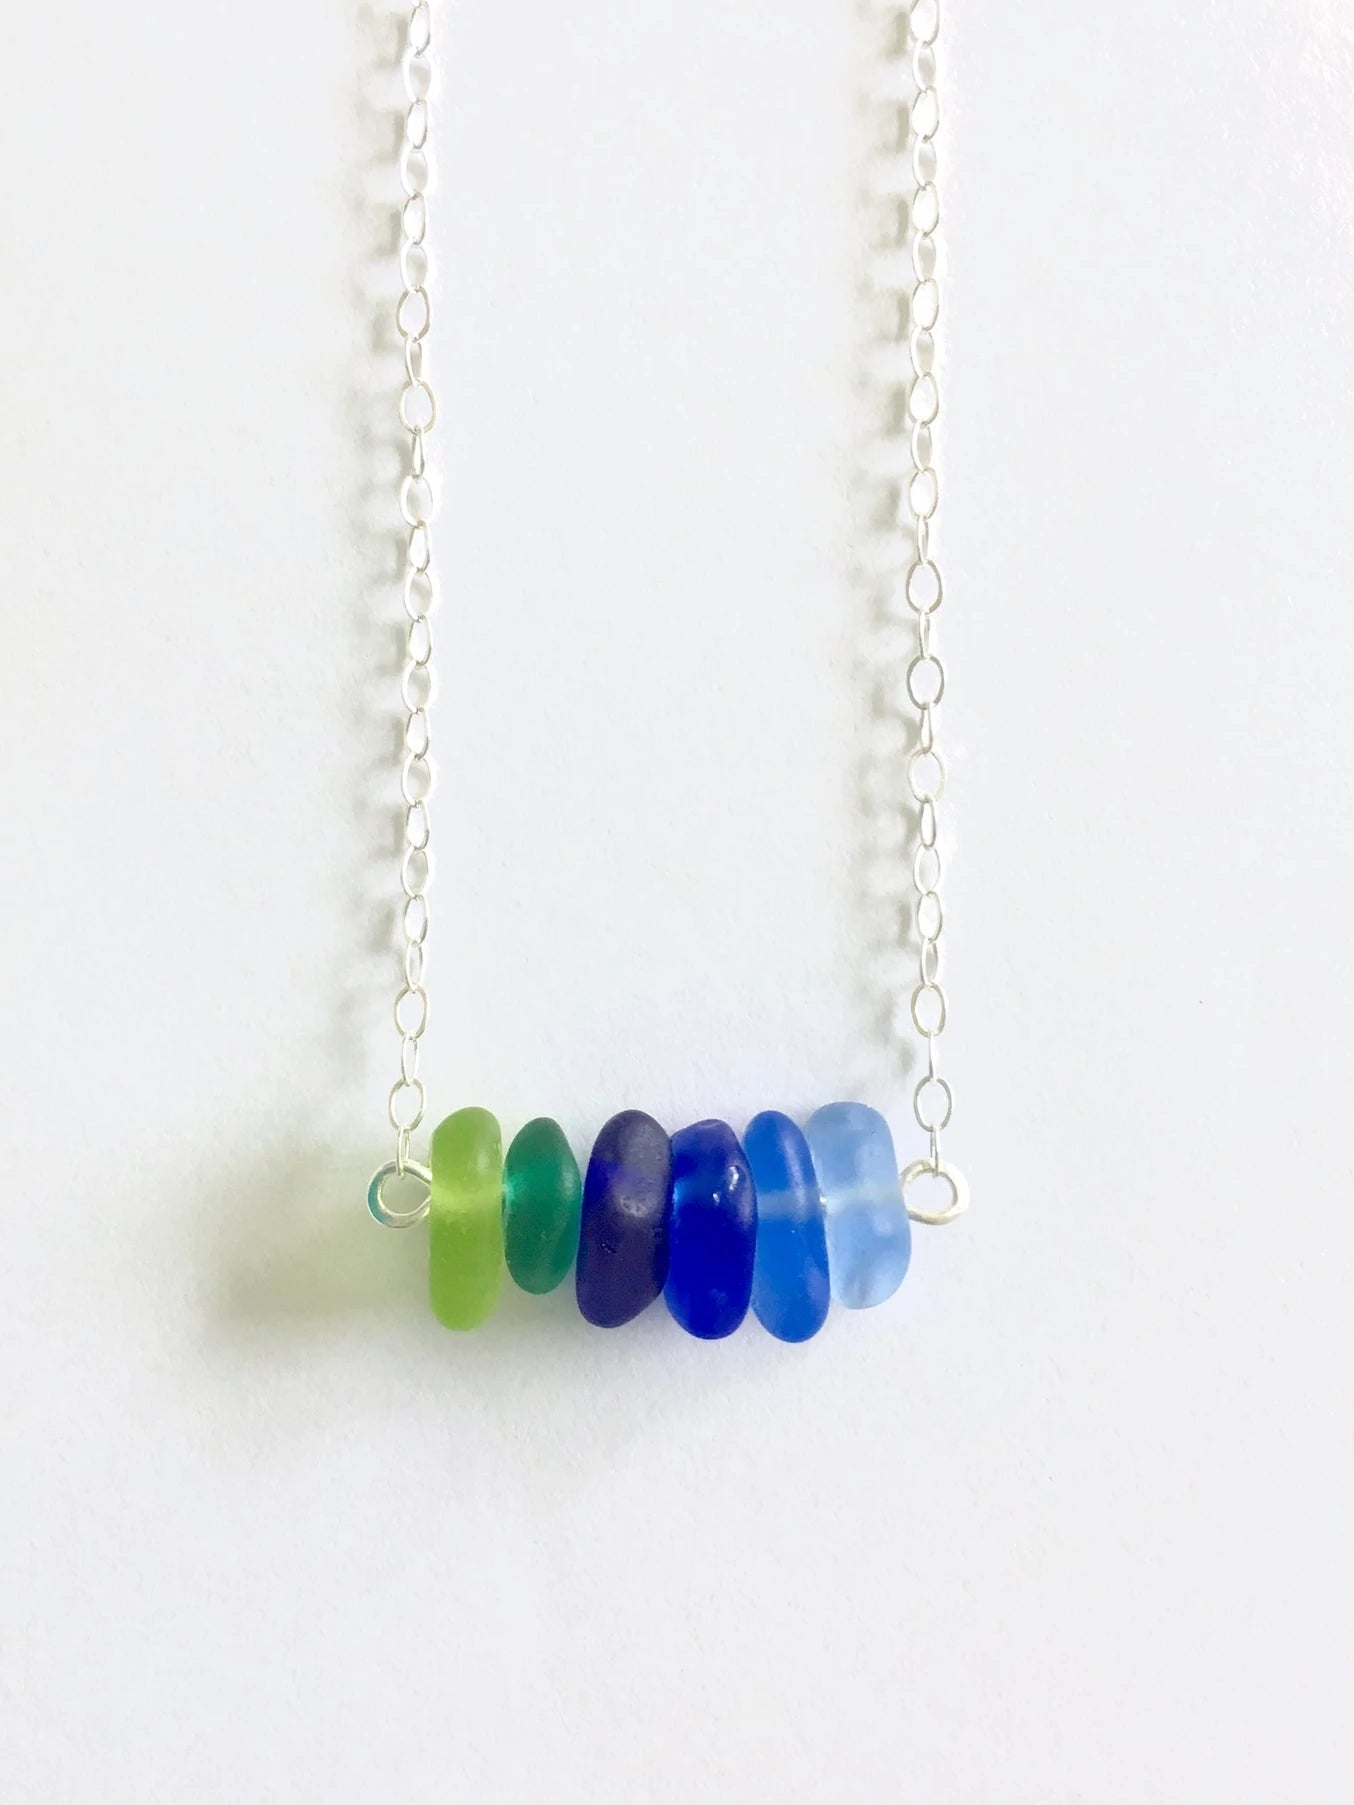 blue sea glass necklace